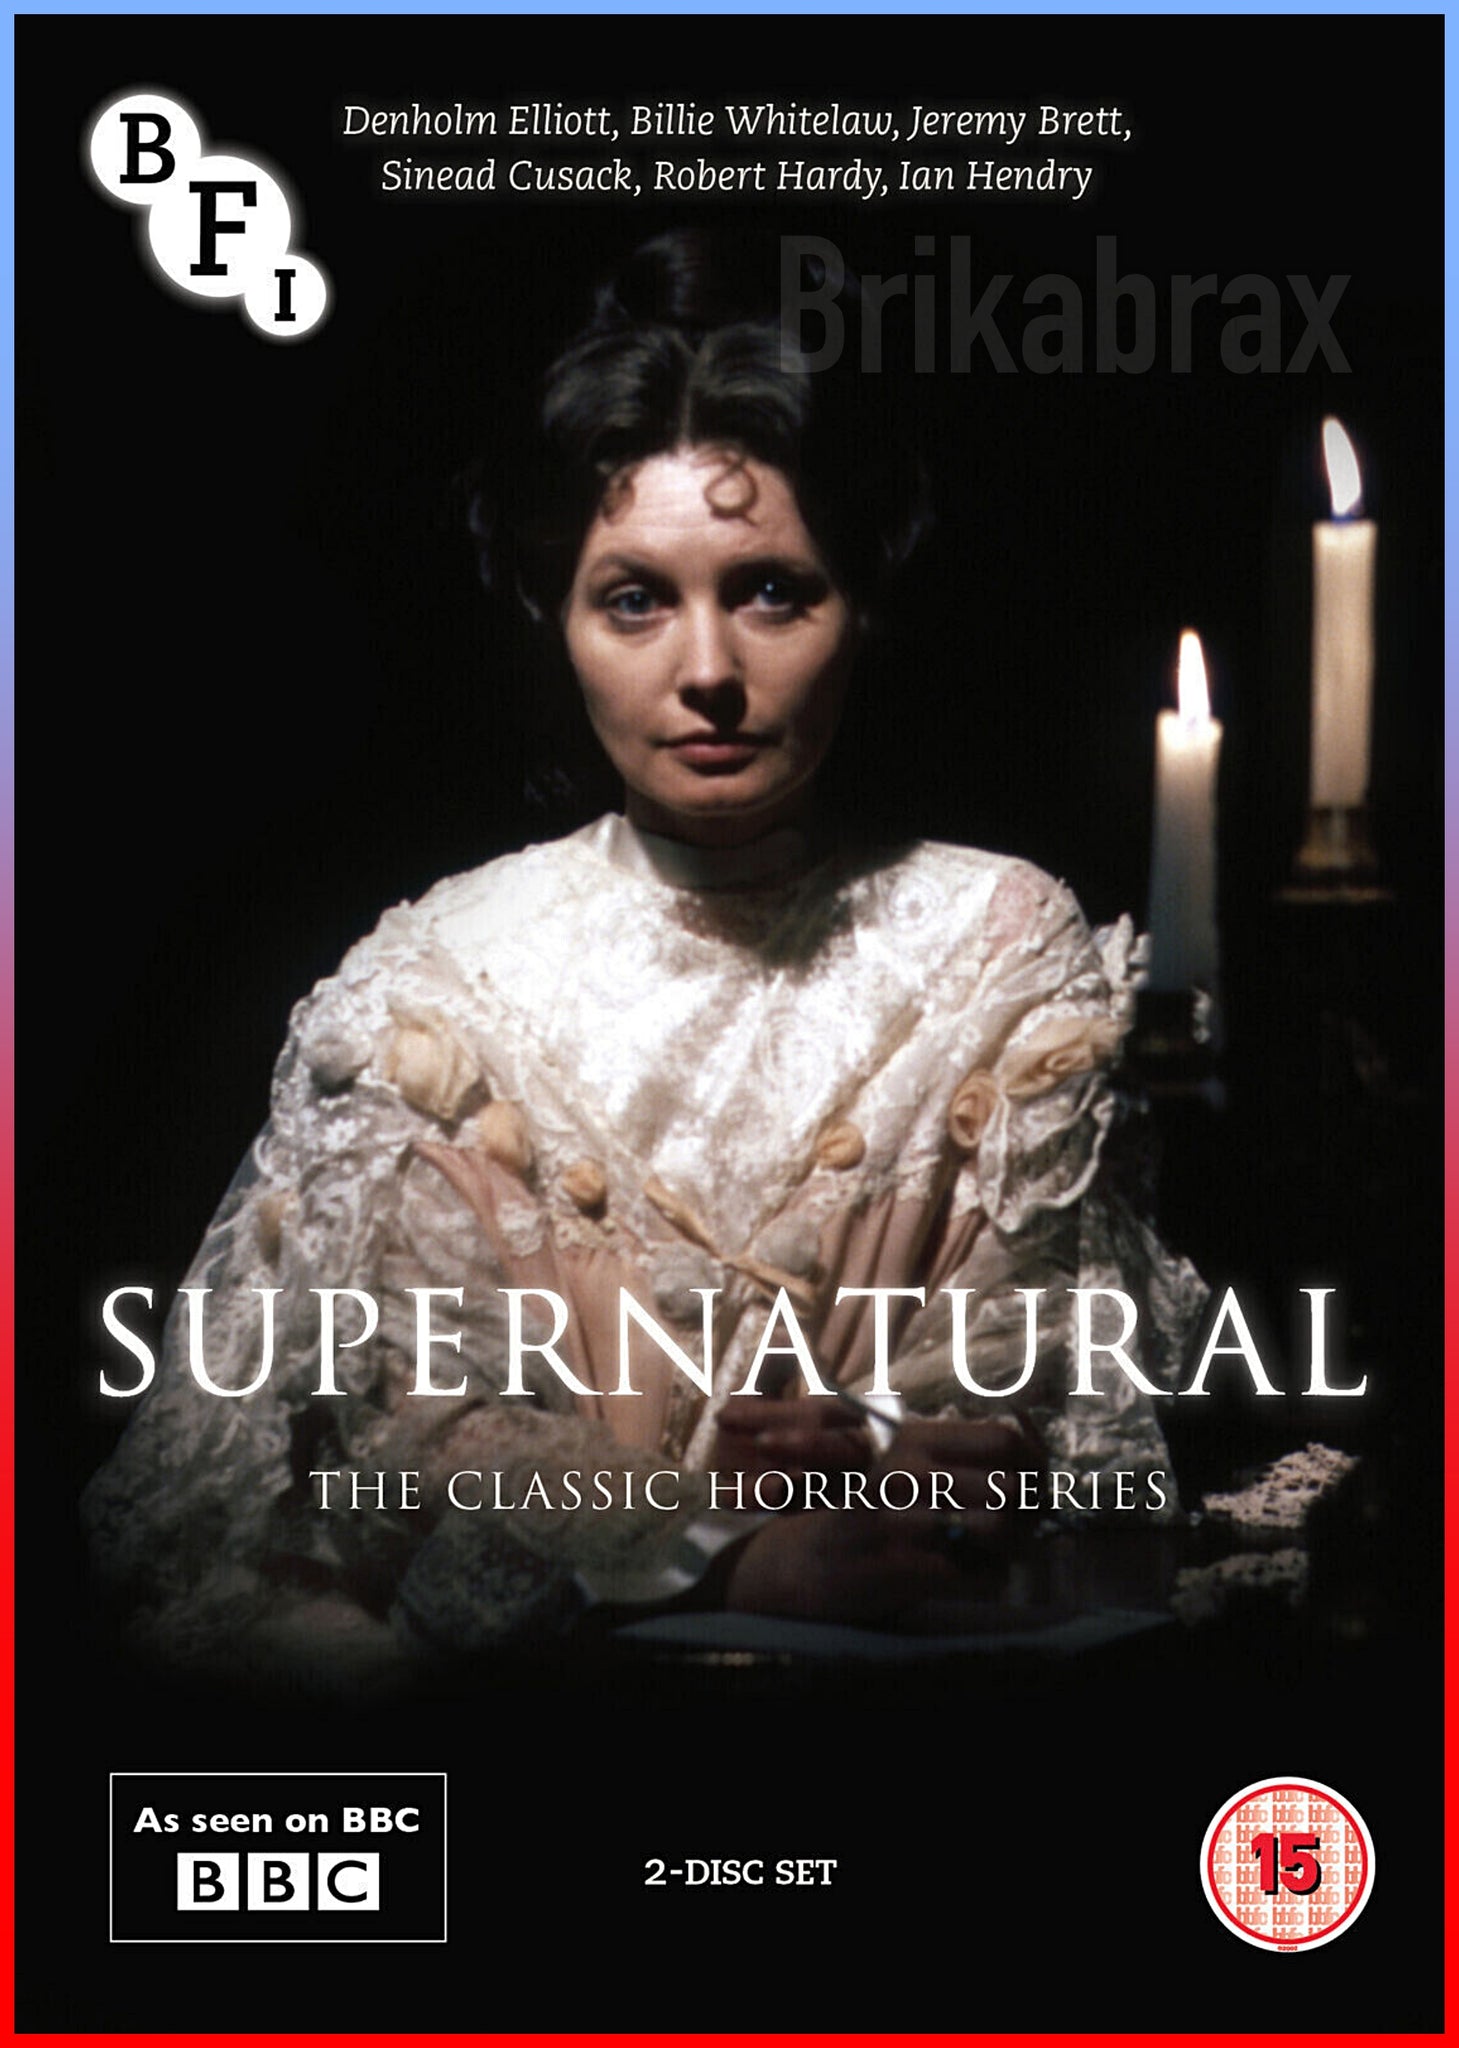 BFI Supernatural The Classic Horror Series BBC 1977 DVD Region 2 PAL